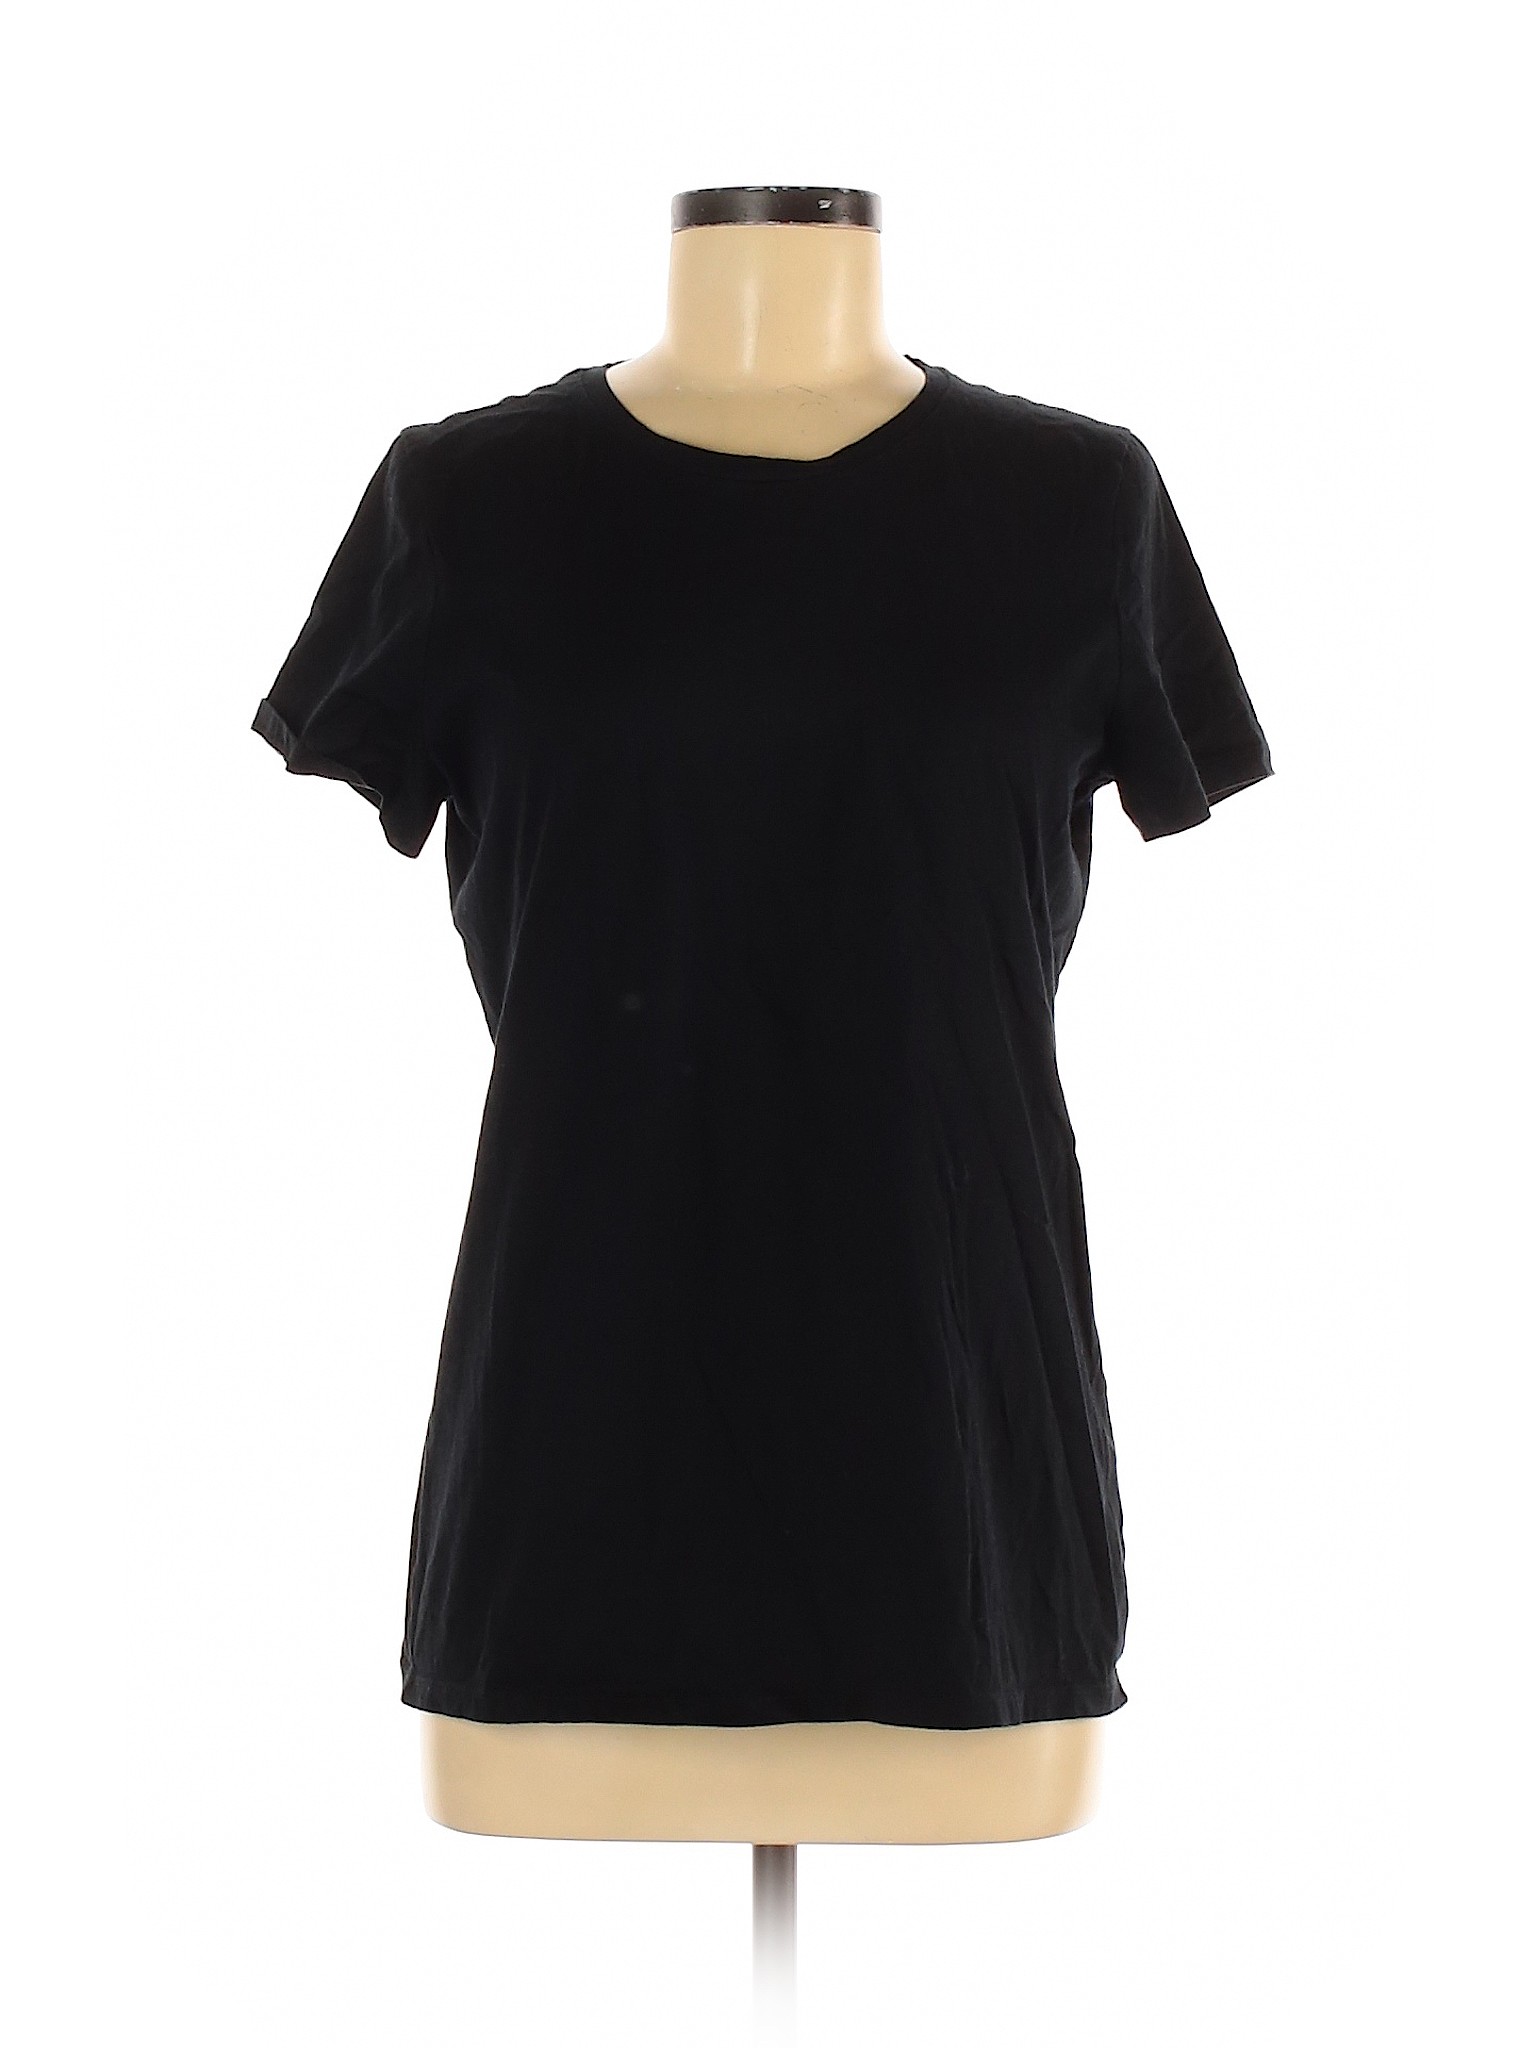 Banana Republic Women Black Short Sleeve T-Shirt M | eBay